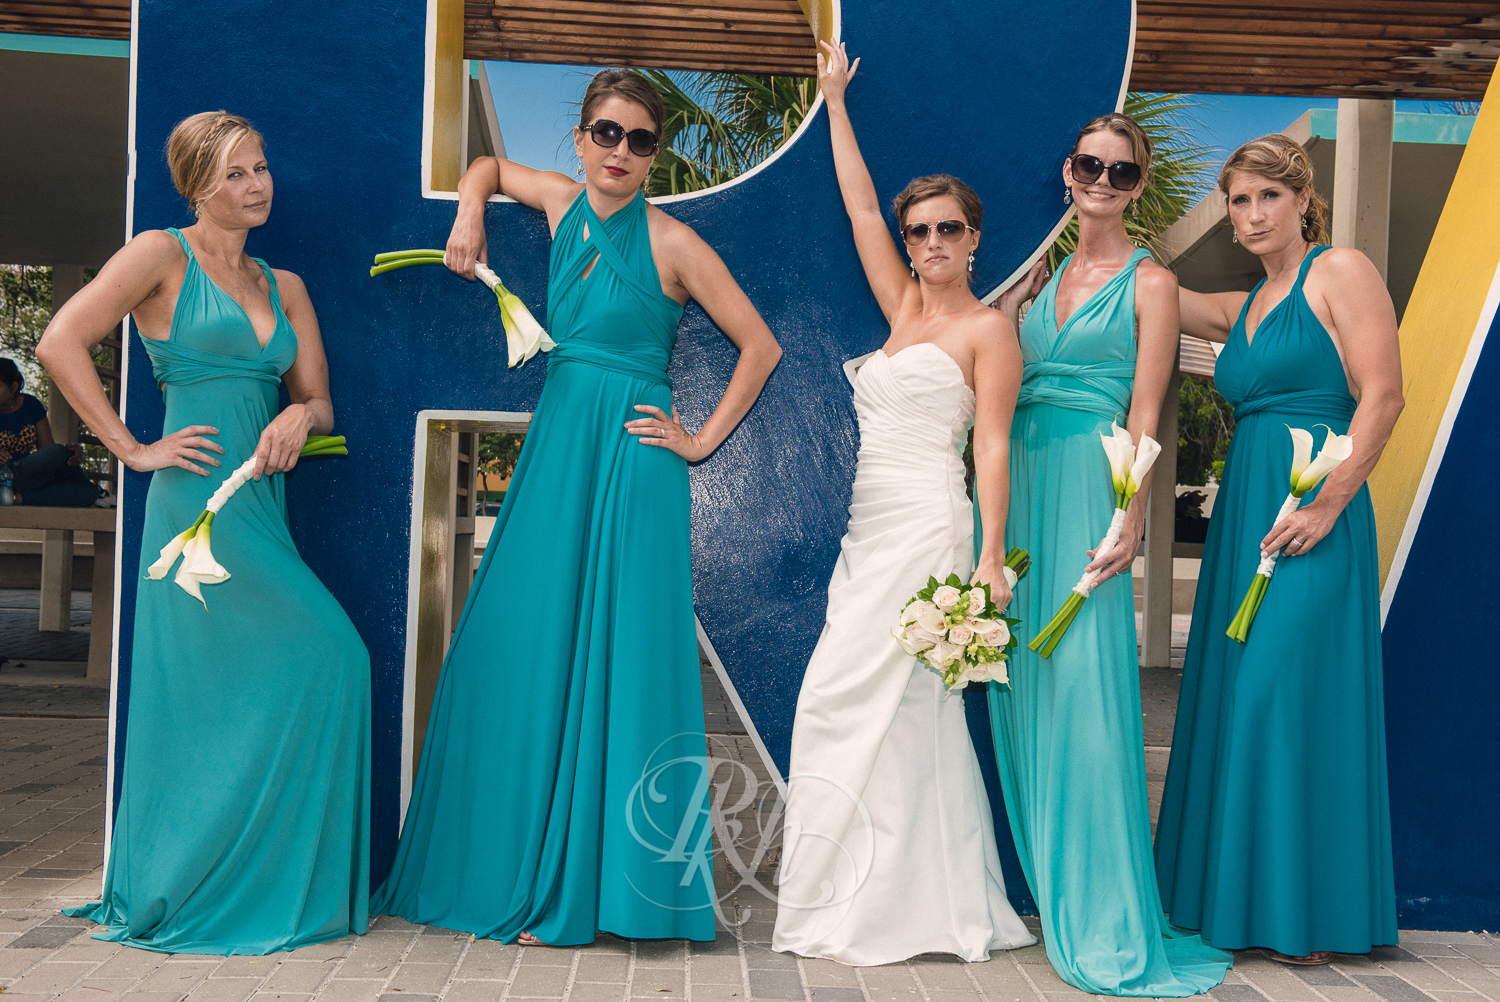  Destination Wedding Photography - Becca & Justin - RKH Images-35 